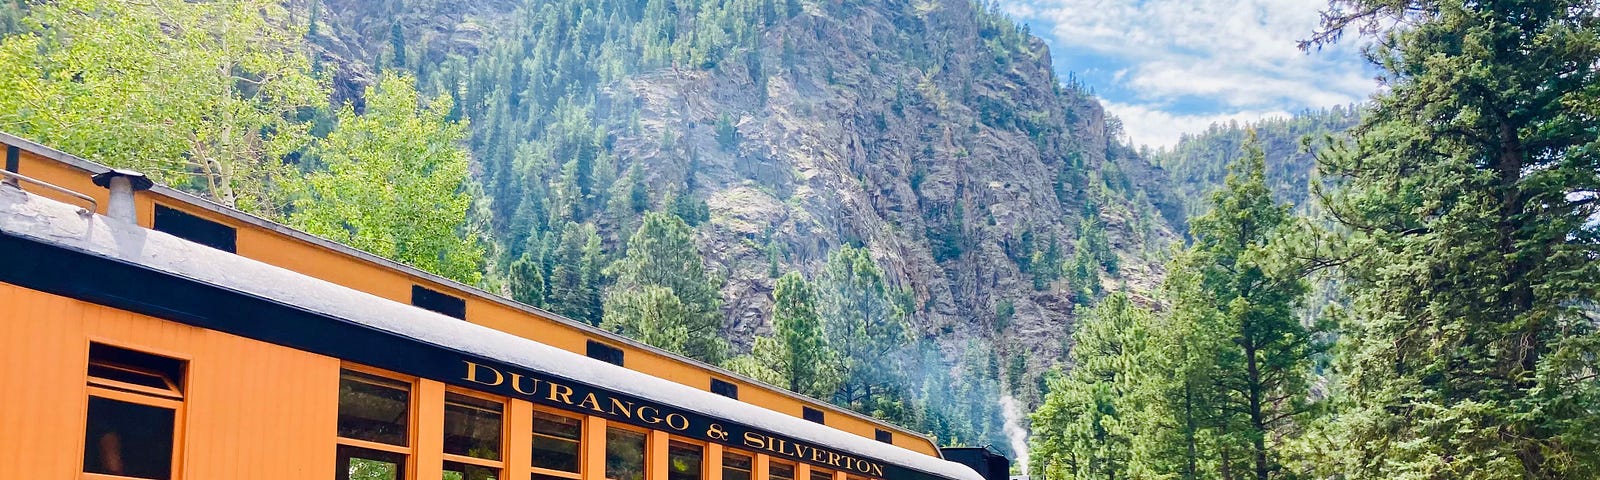 A yellow train car of the Durango-Silverton Railroad sits amidst Colordo mountain scenery